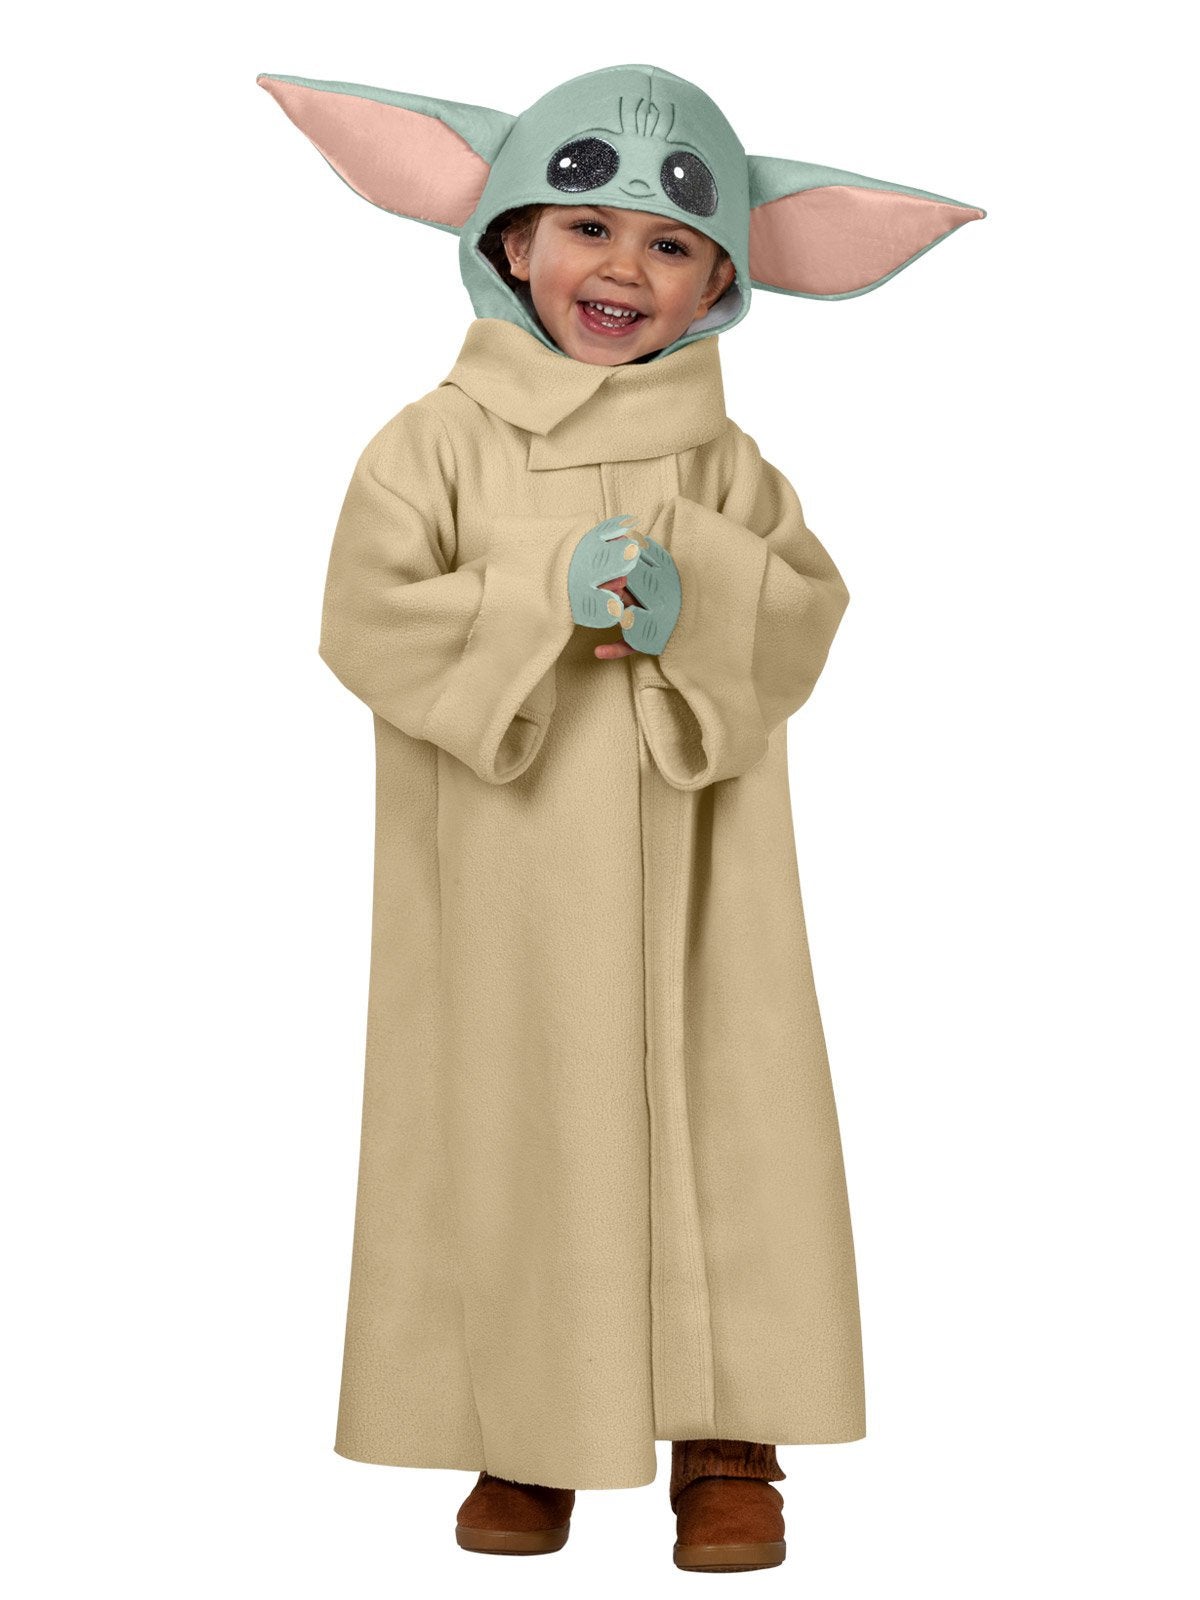 The Child Mandalorian Costume for Kids - Disney Star Wars